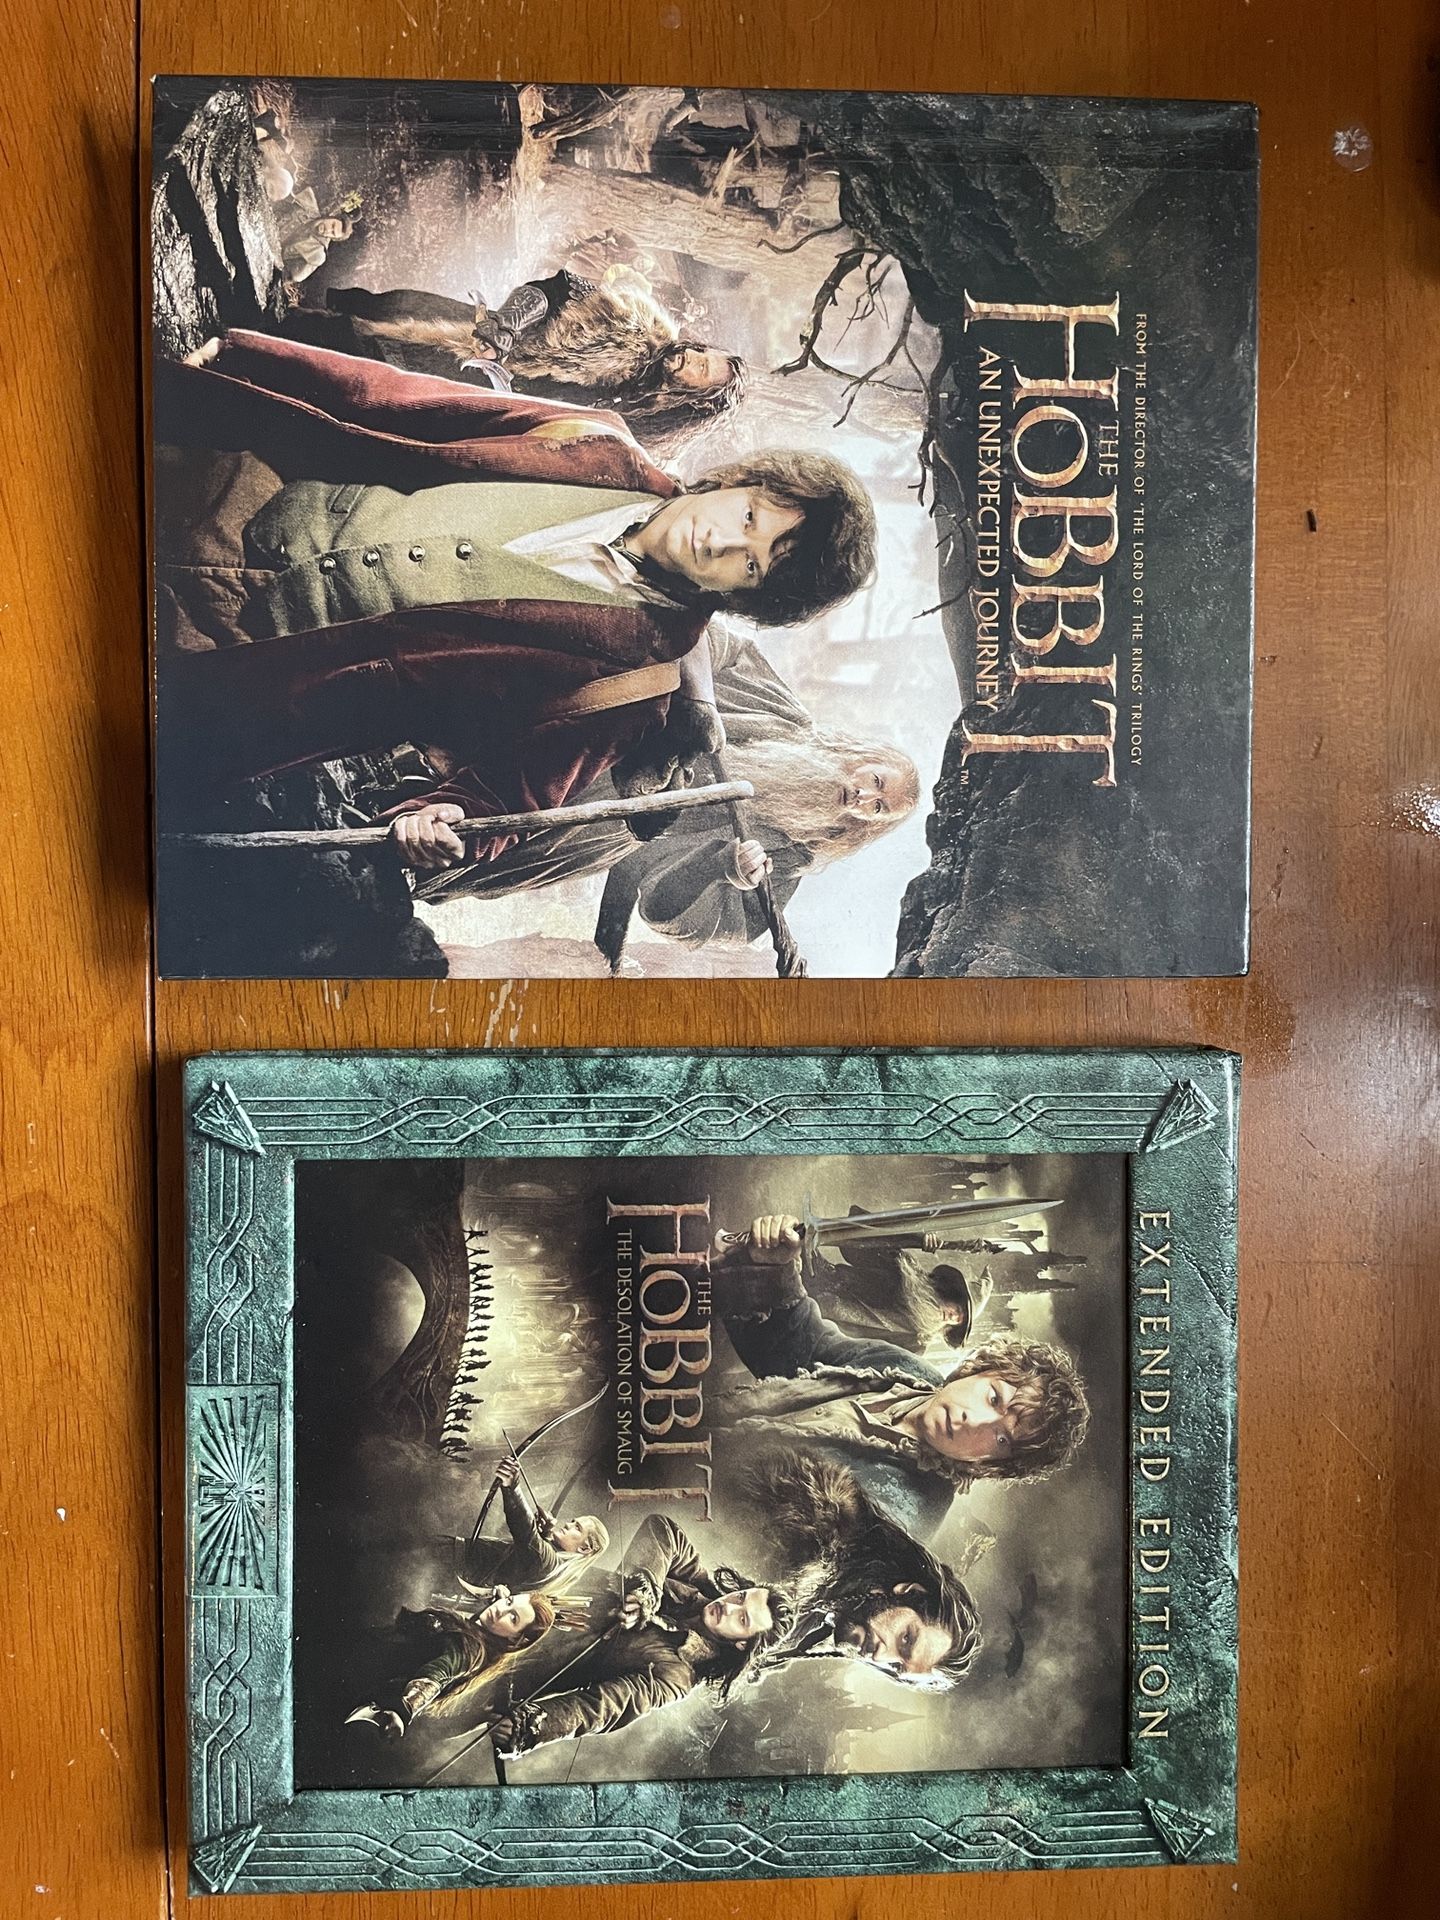 Blu-ray: The Hobbit (1 and 2)